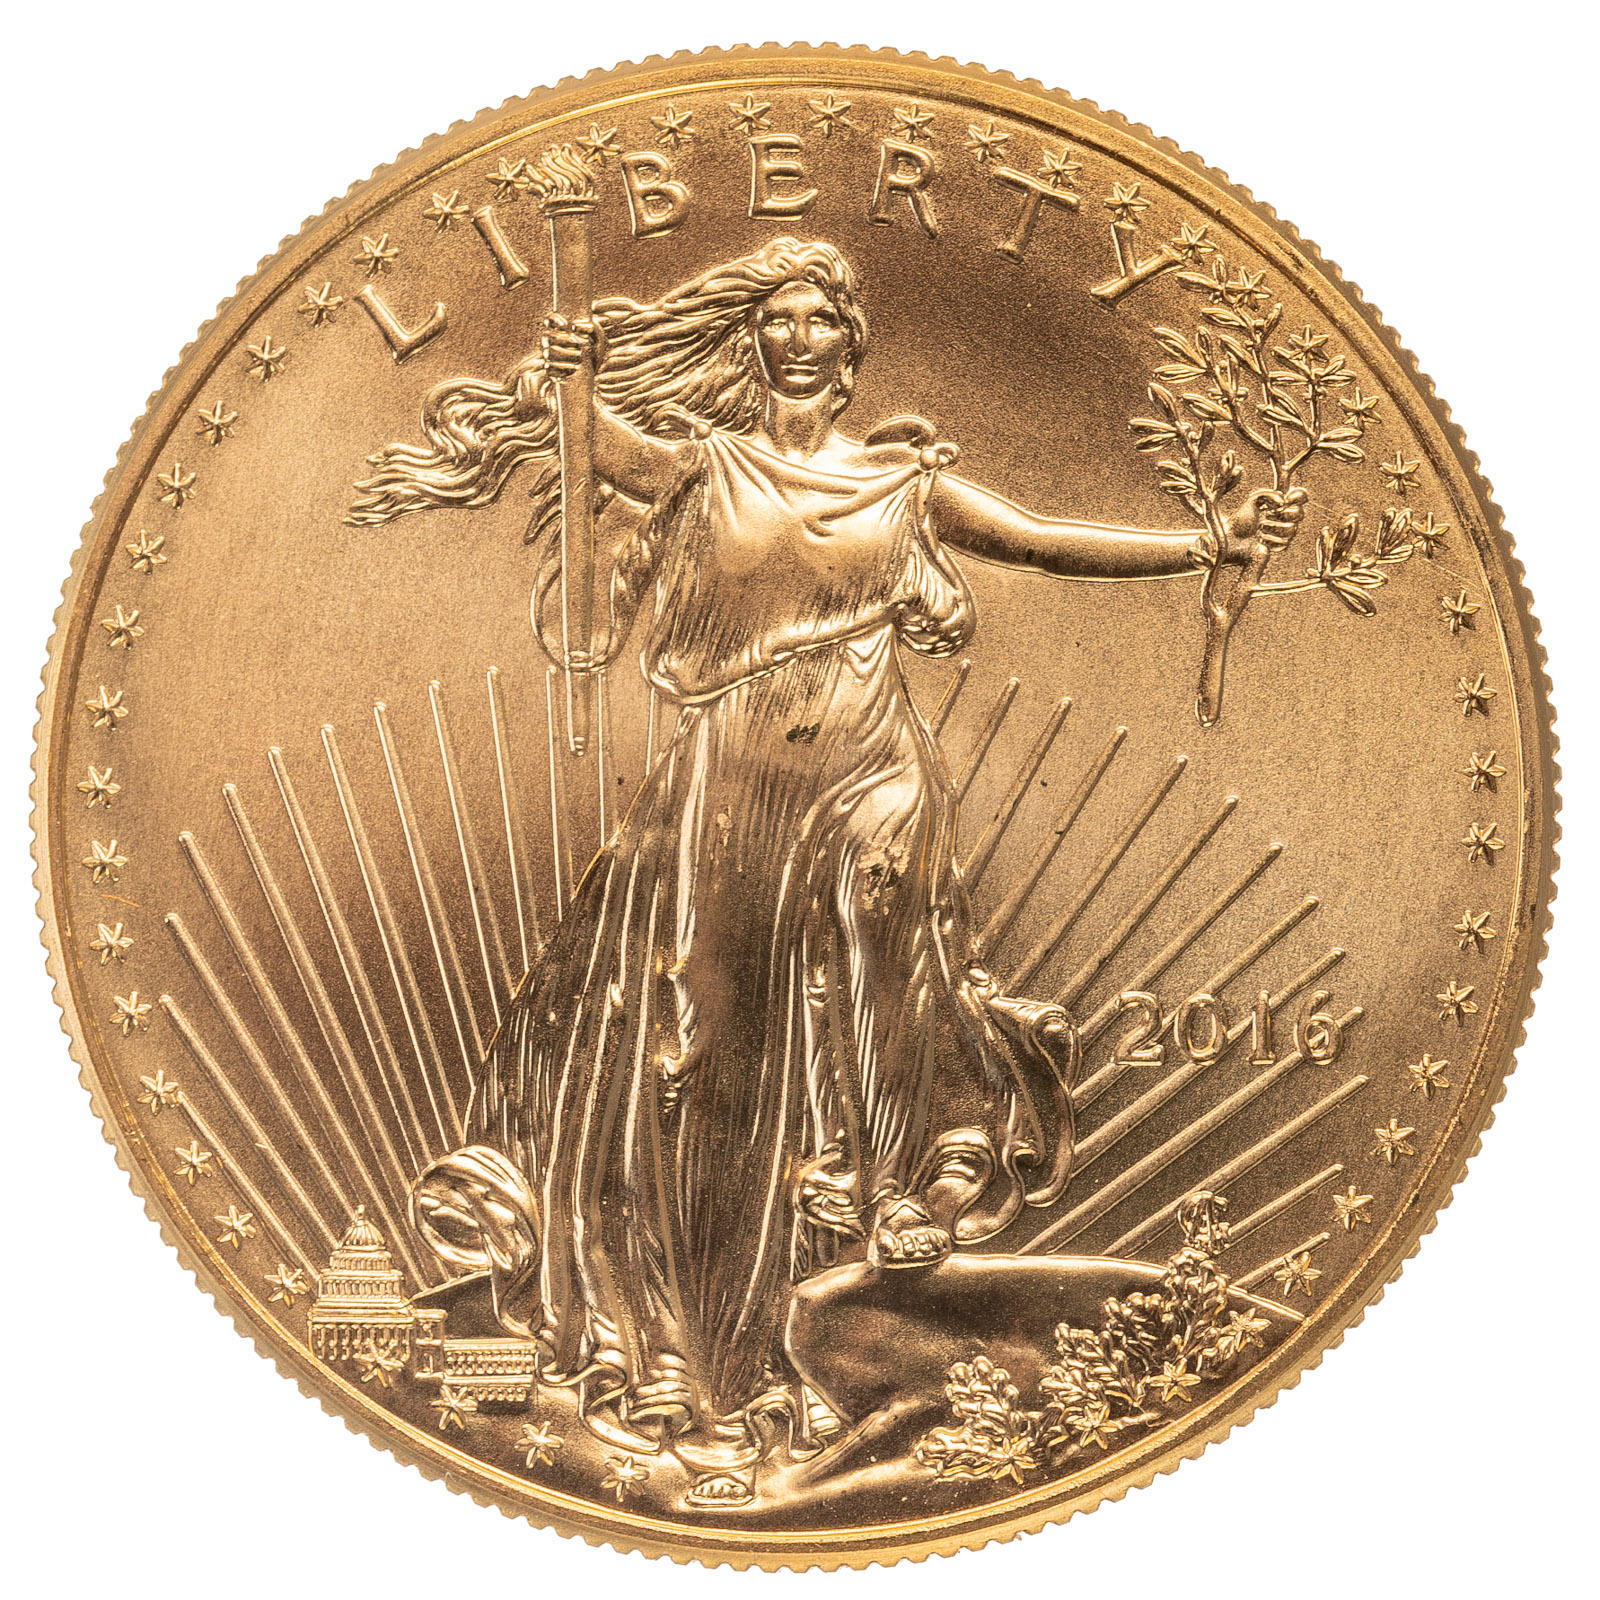 2016 $50 1 OZ GOLD AMERICAN EAGLE